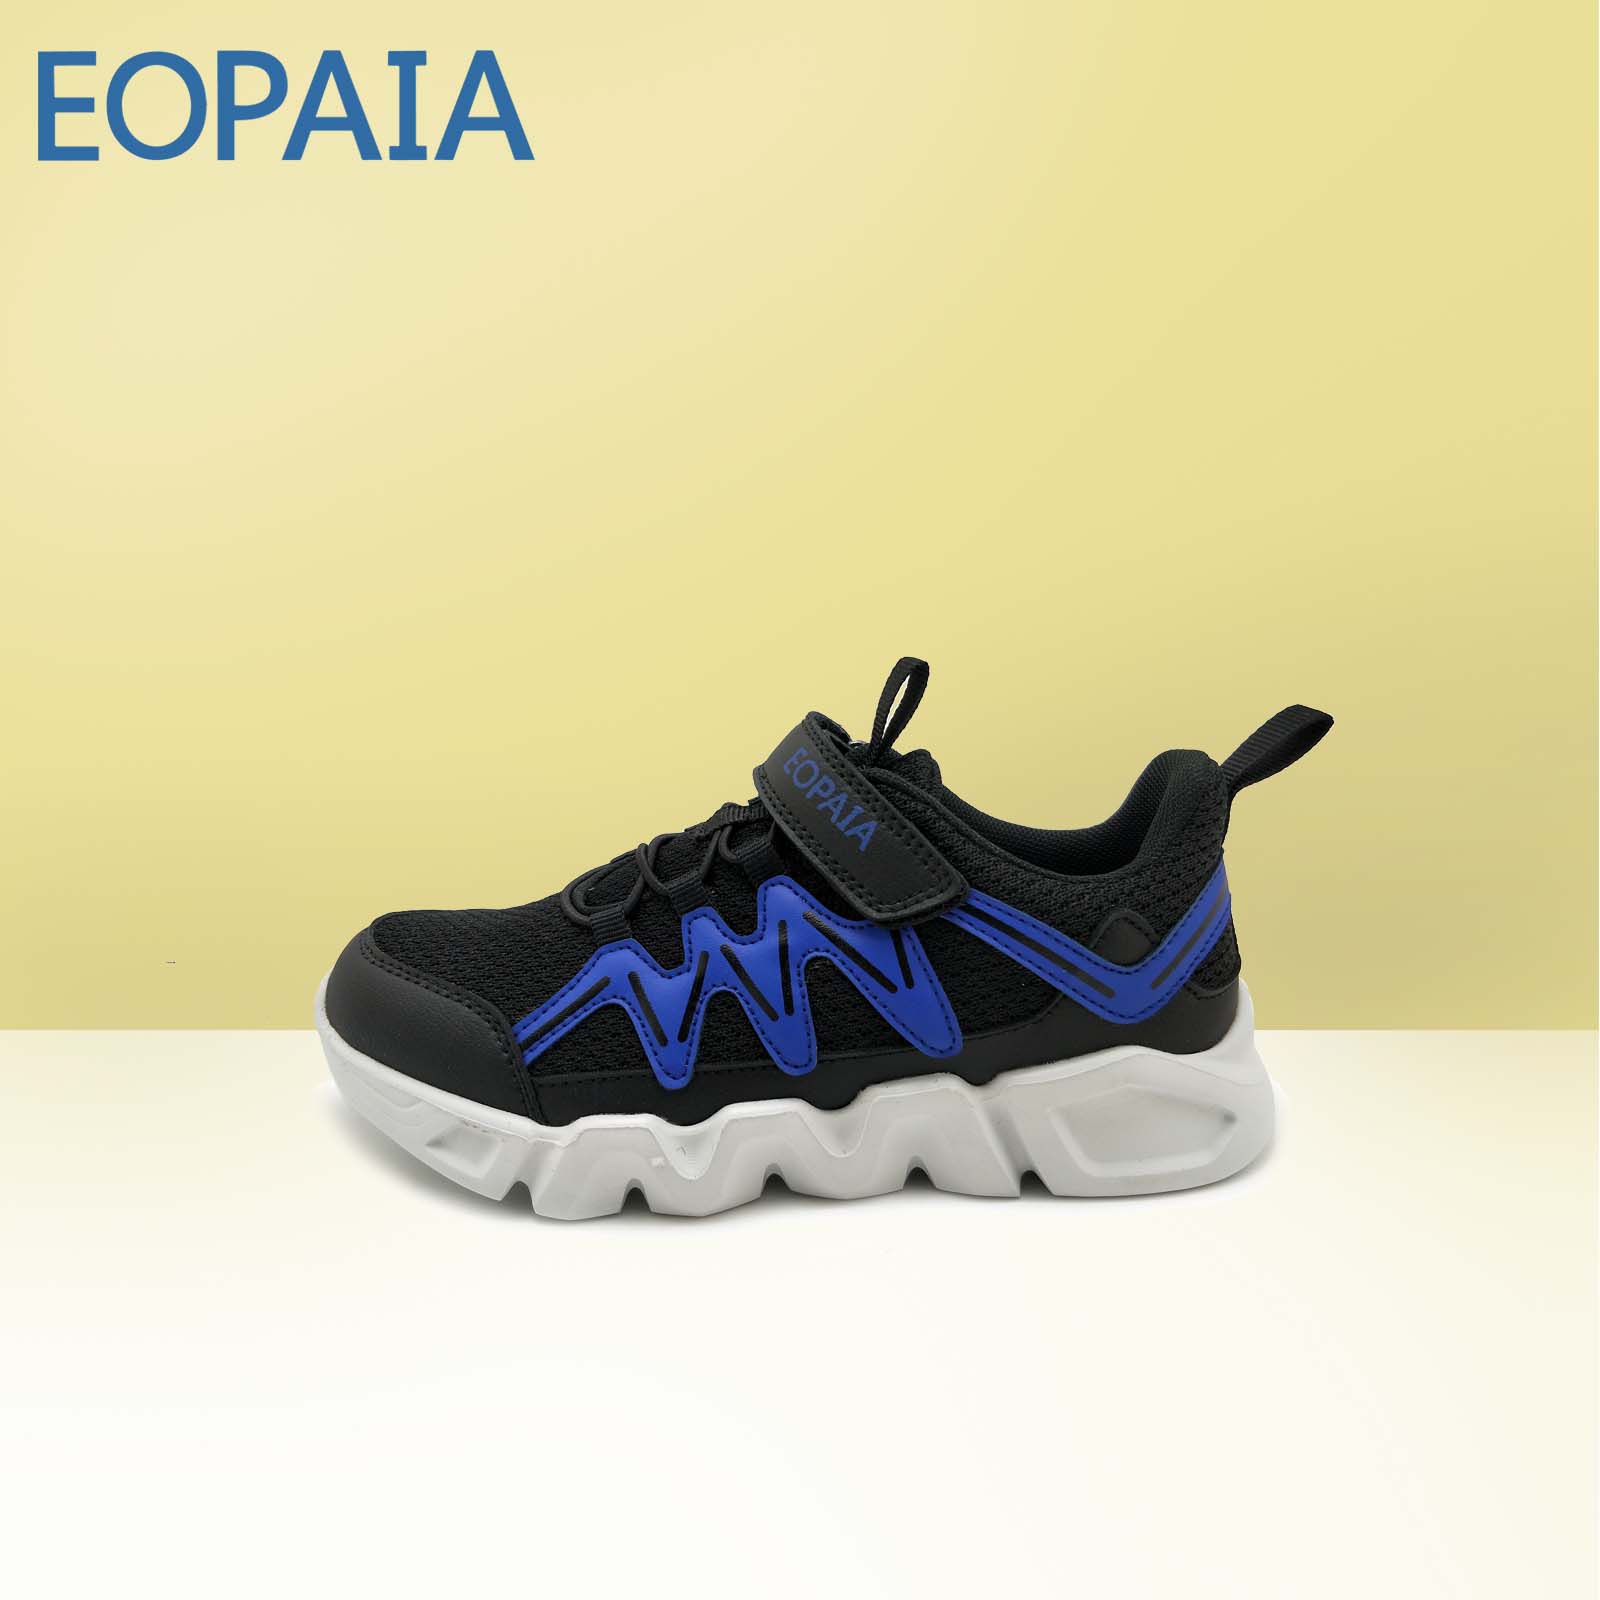 Sepatu Anak PU Sepatu Velcro Sepatu Sepatu Olahraga Sepatu Fashion Kasual Lace-Up Sepatu Lari Sepatu Kartun Sepatu Sekolah Sepatu